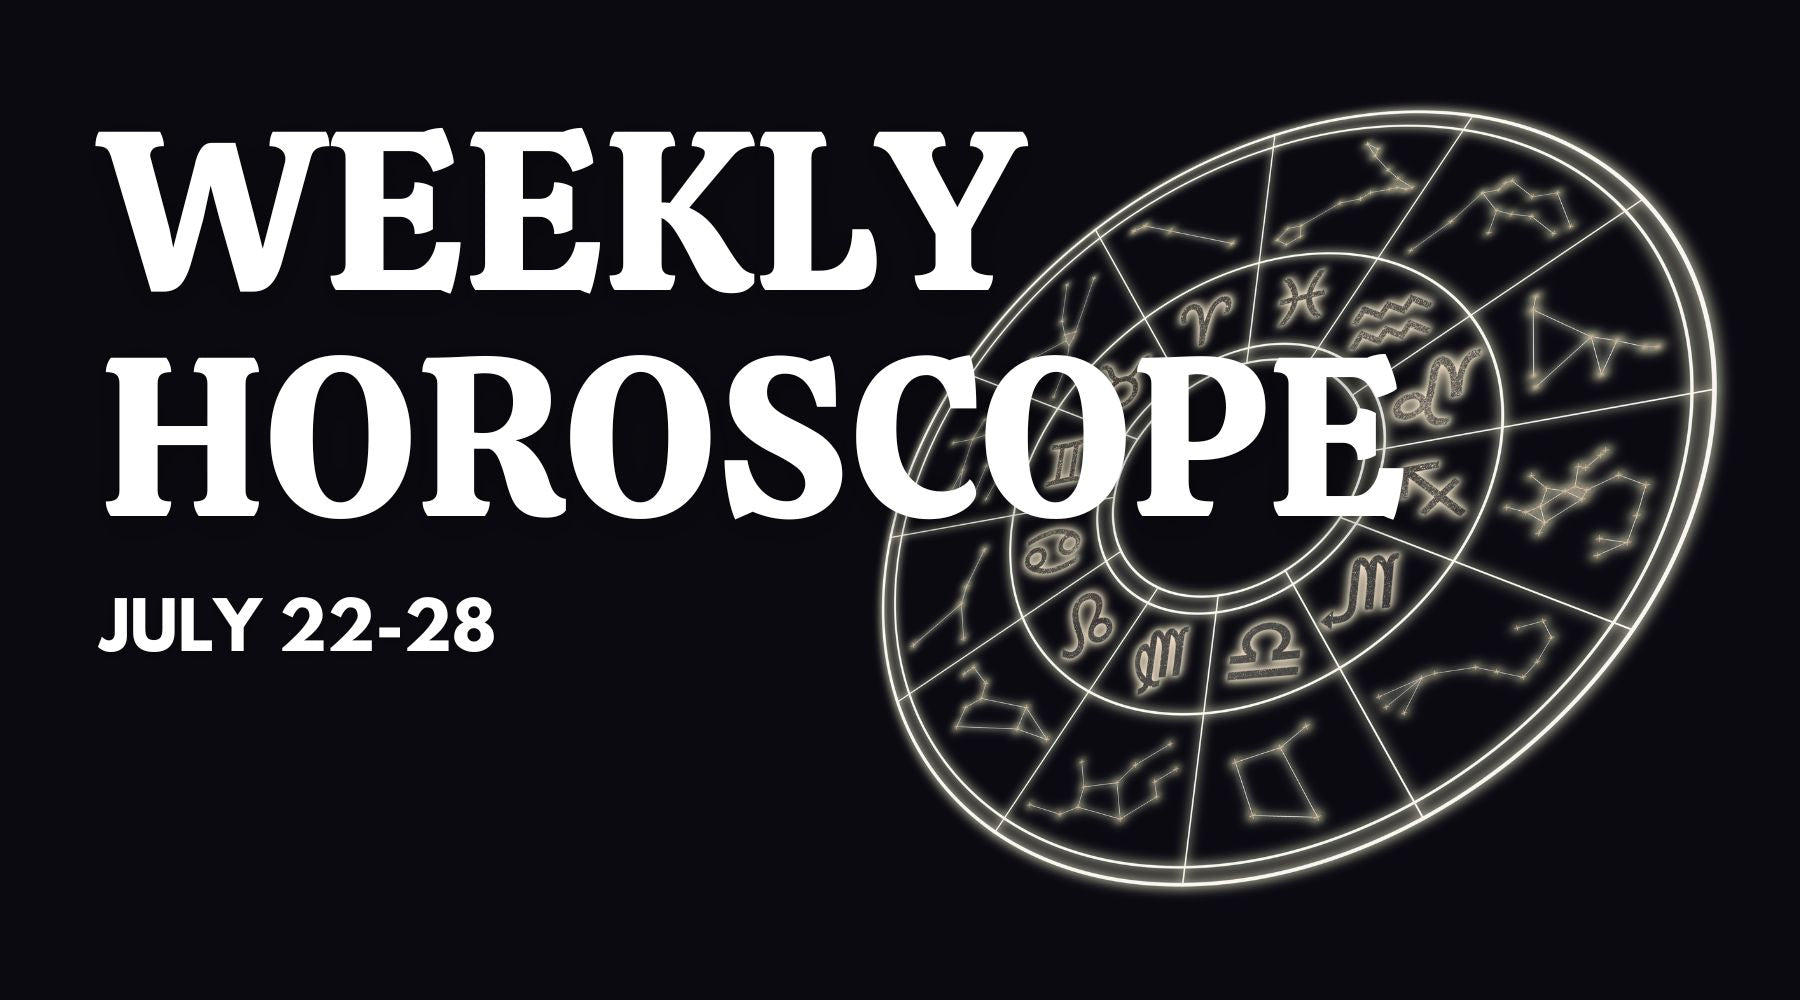 Weekly Horoscope: July 22 - July 28